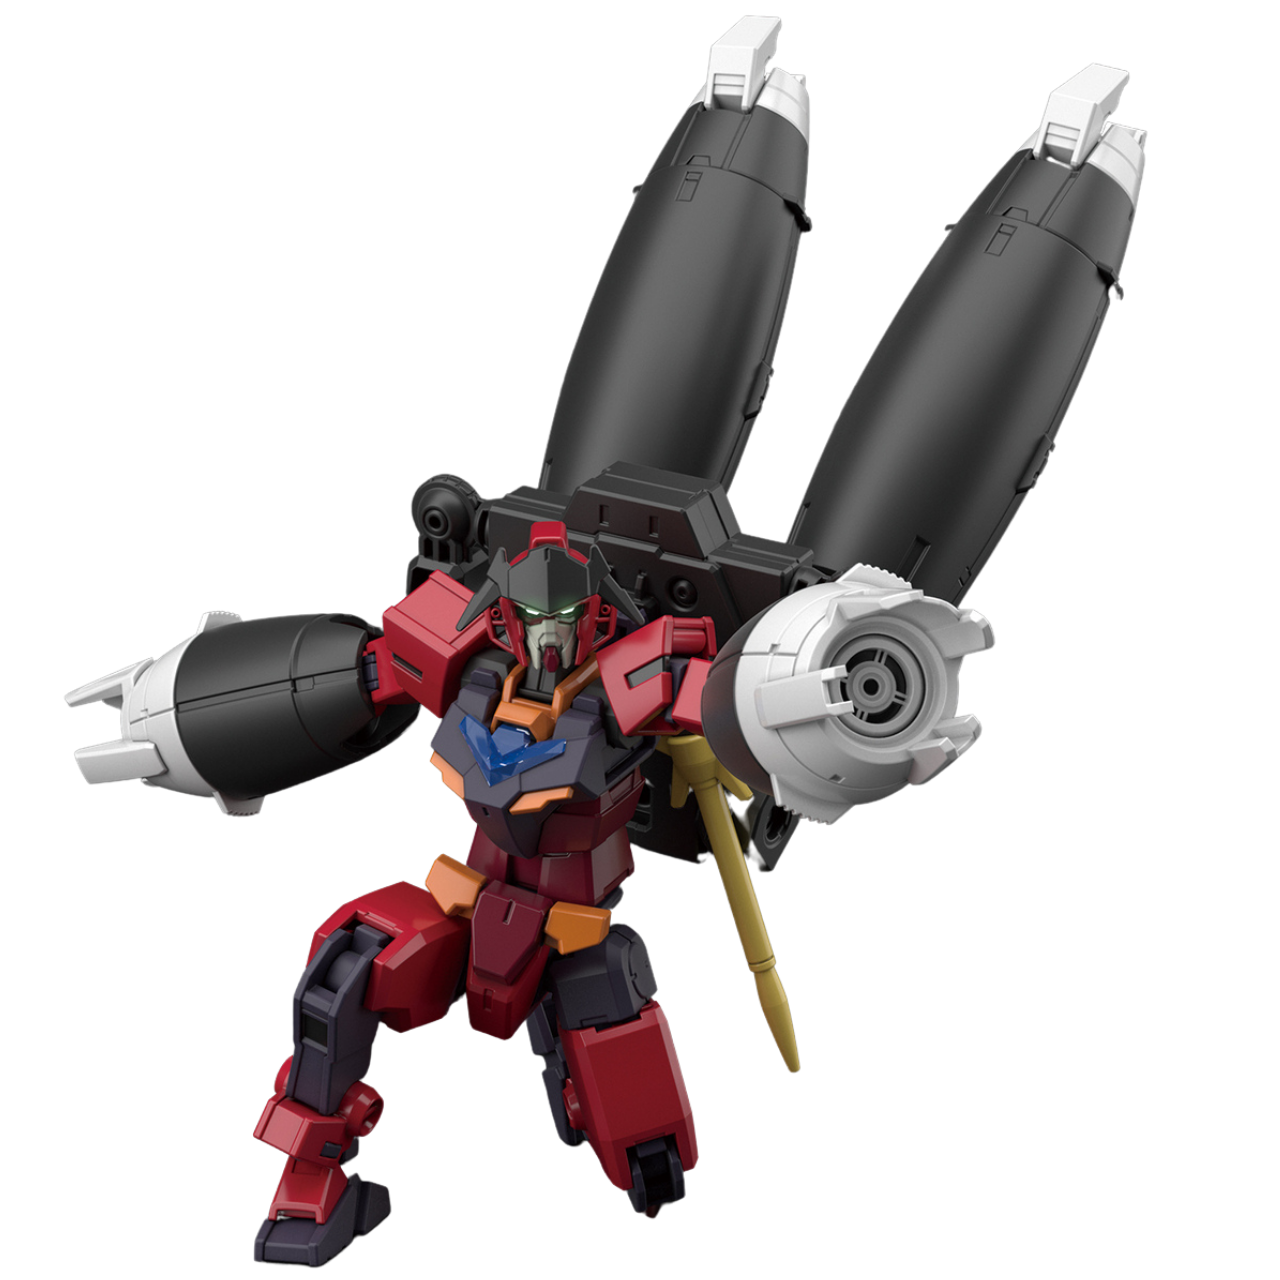 Bandai: Gundam Aun RIZE Armor Support Unit HG 1/144